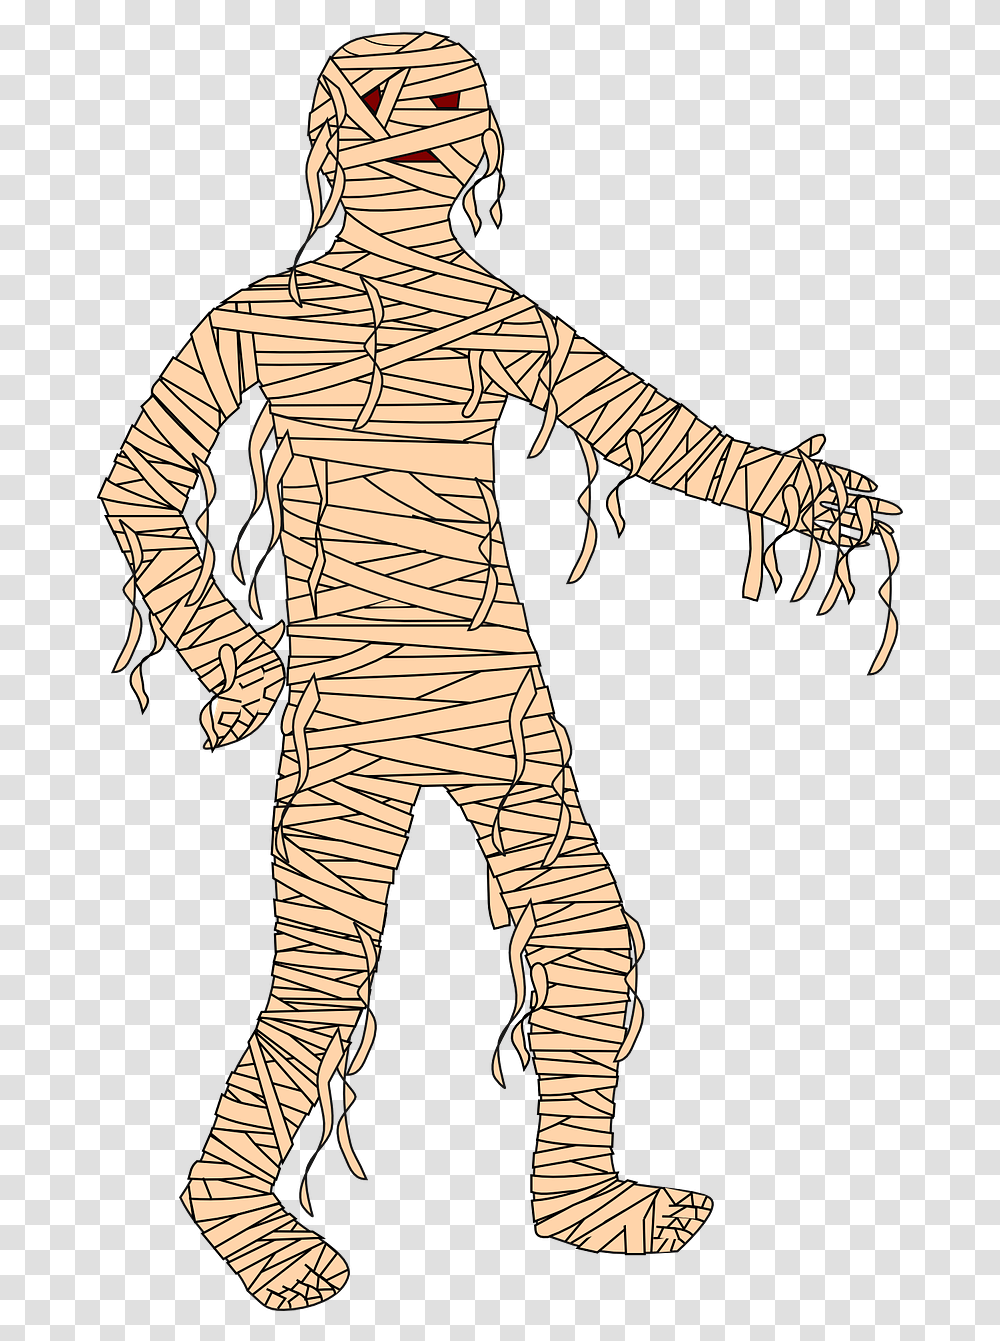 Mummy Cartoon Halloween Free Vector Graphic On Pixabay Egyptian Mummy For Kids, Person, Human, Astronaut, Animal Transparent Png